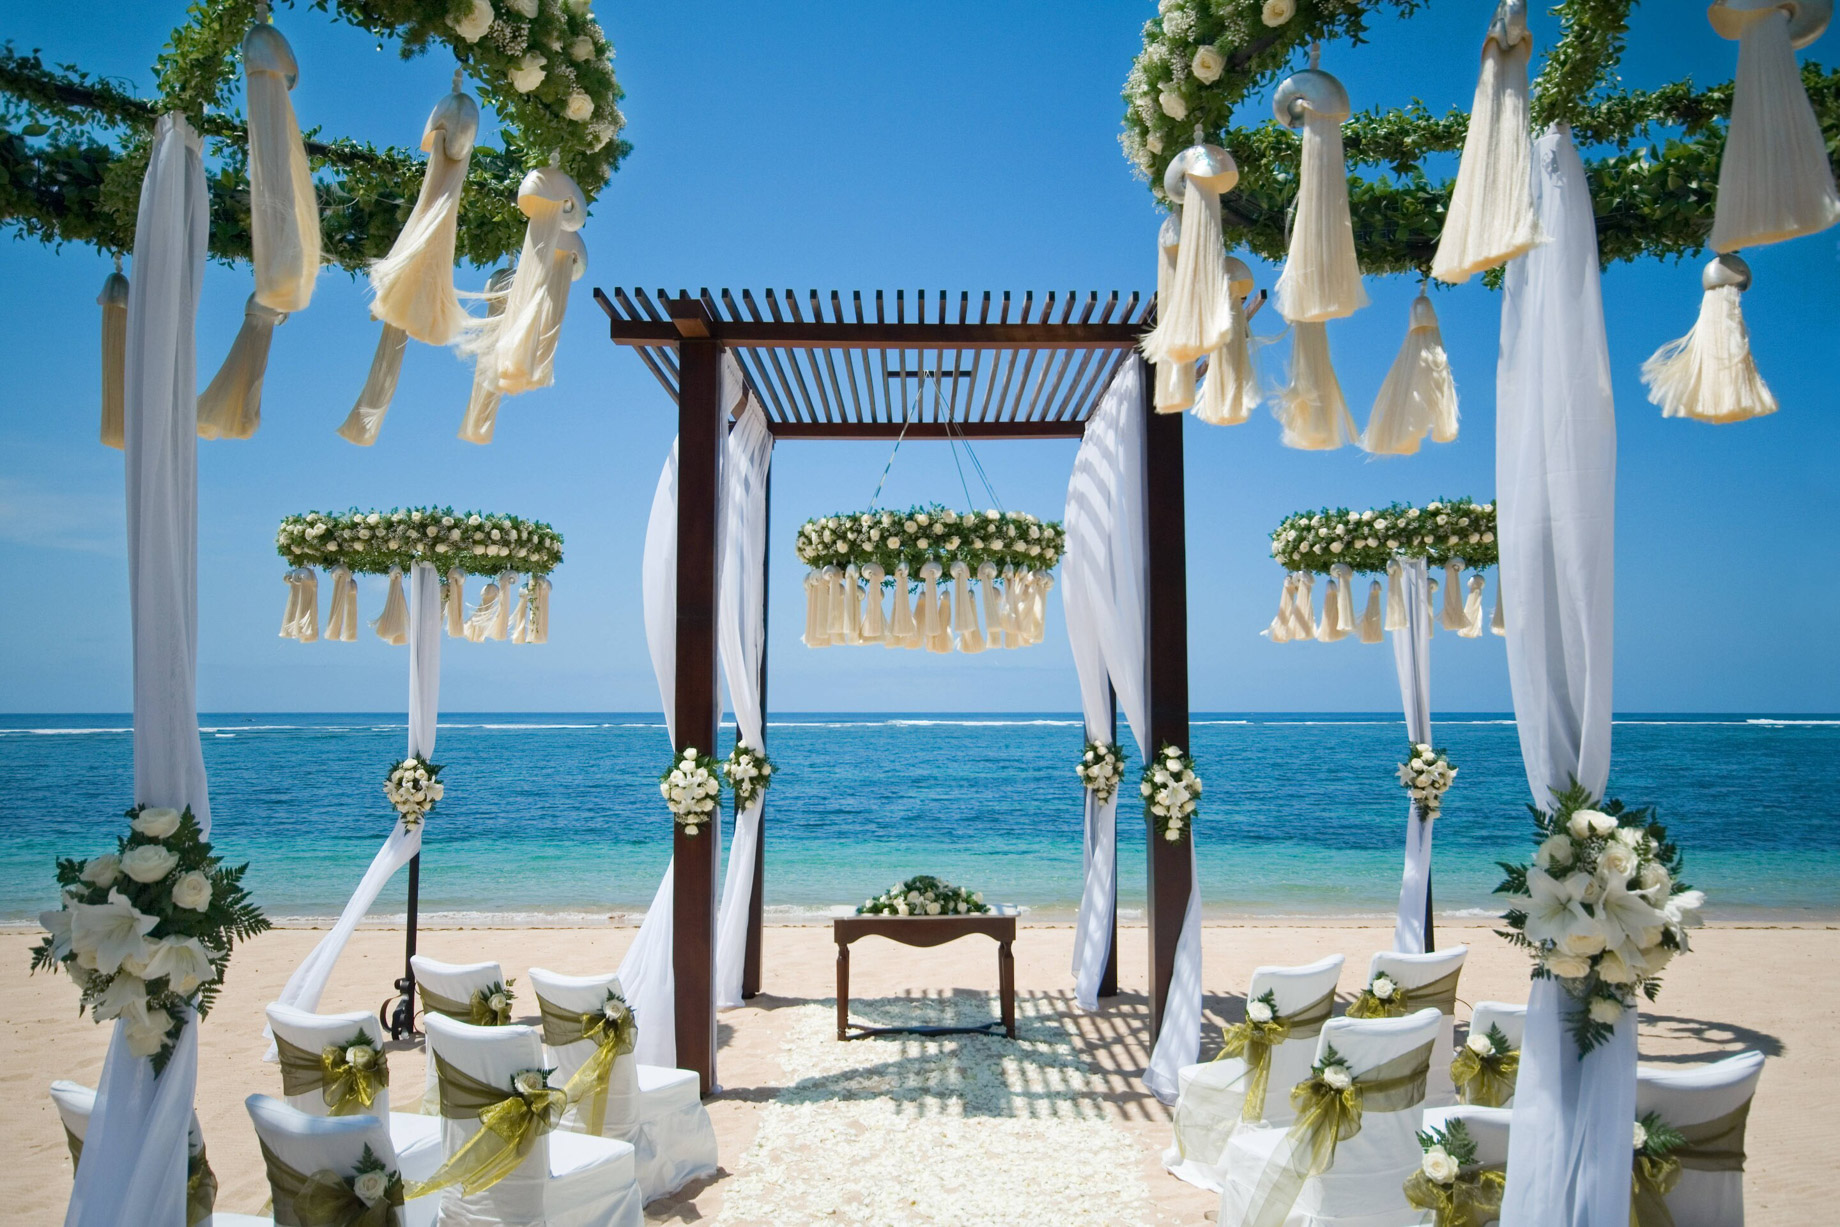 The St. Regis Bali Resort - Bali, Indonesia - Glorious Beach Wedding